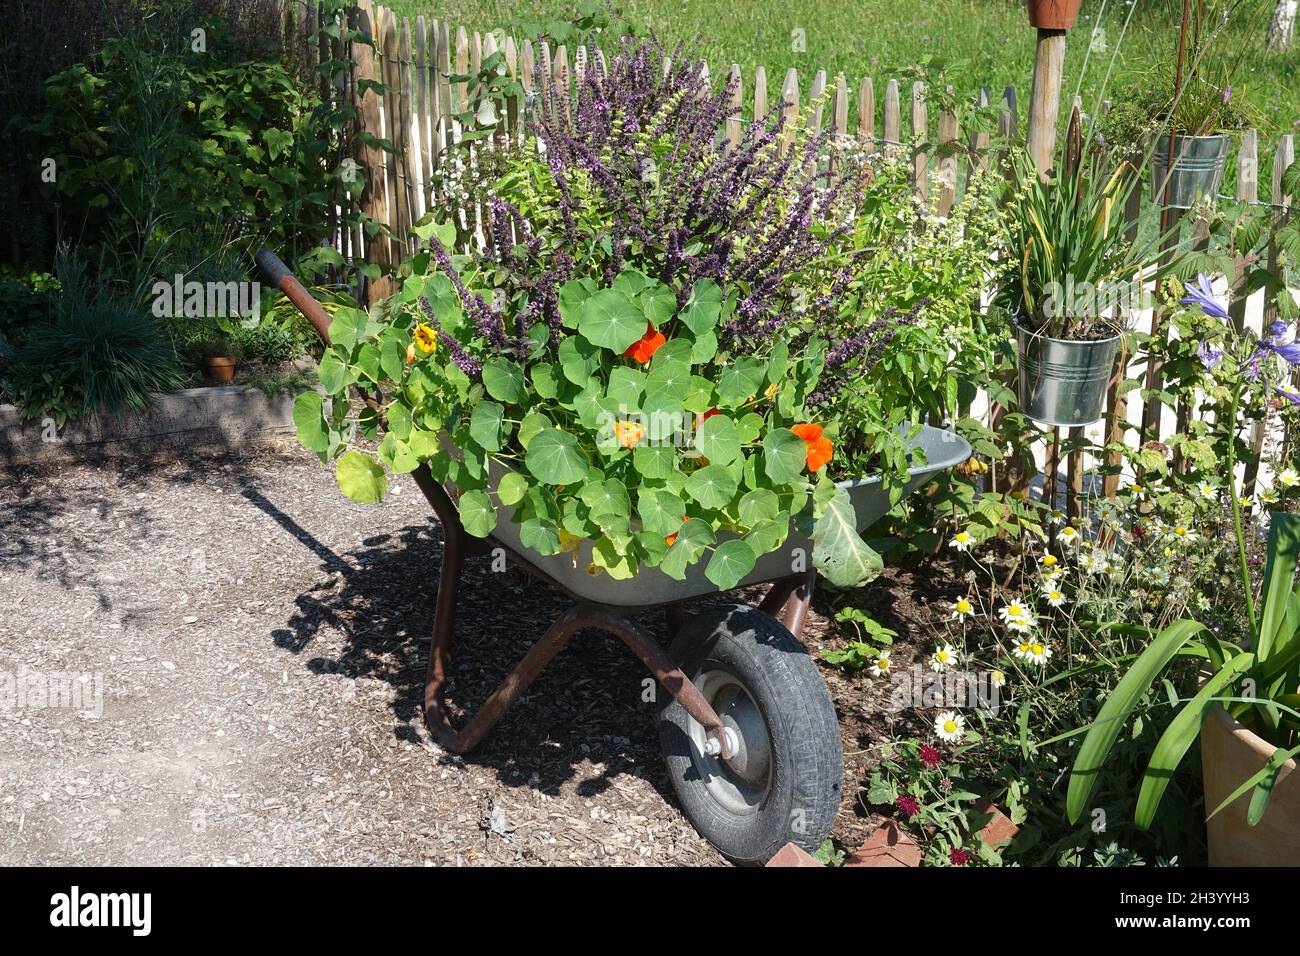 Wheelbarrow with plants Stock Photo